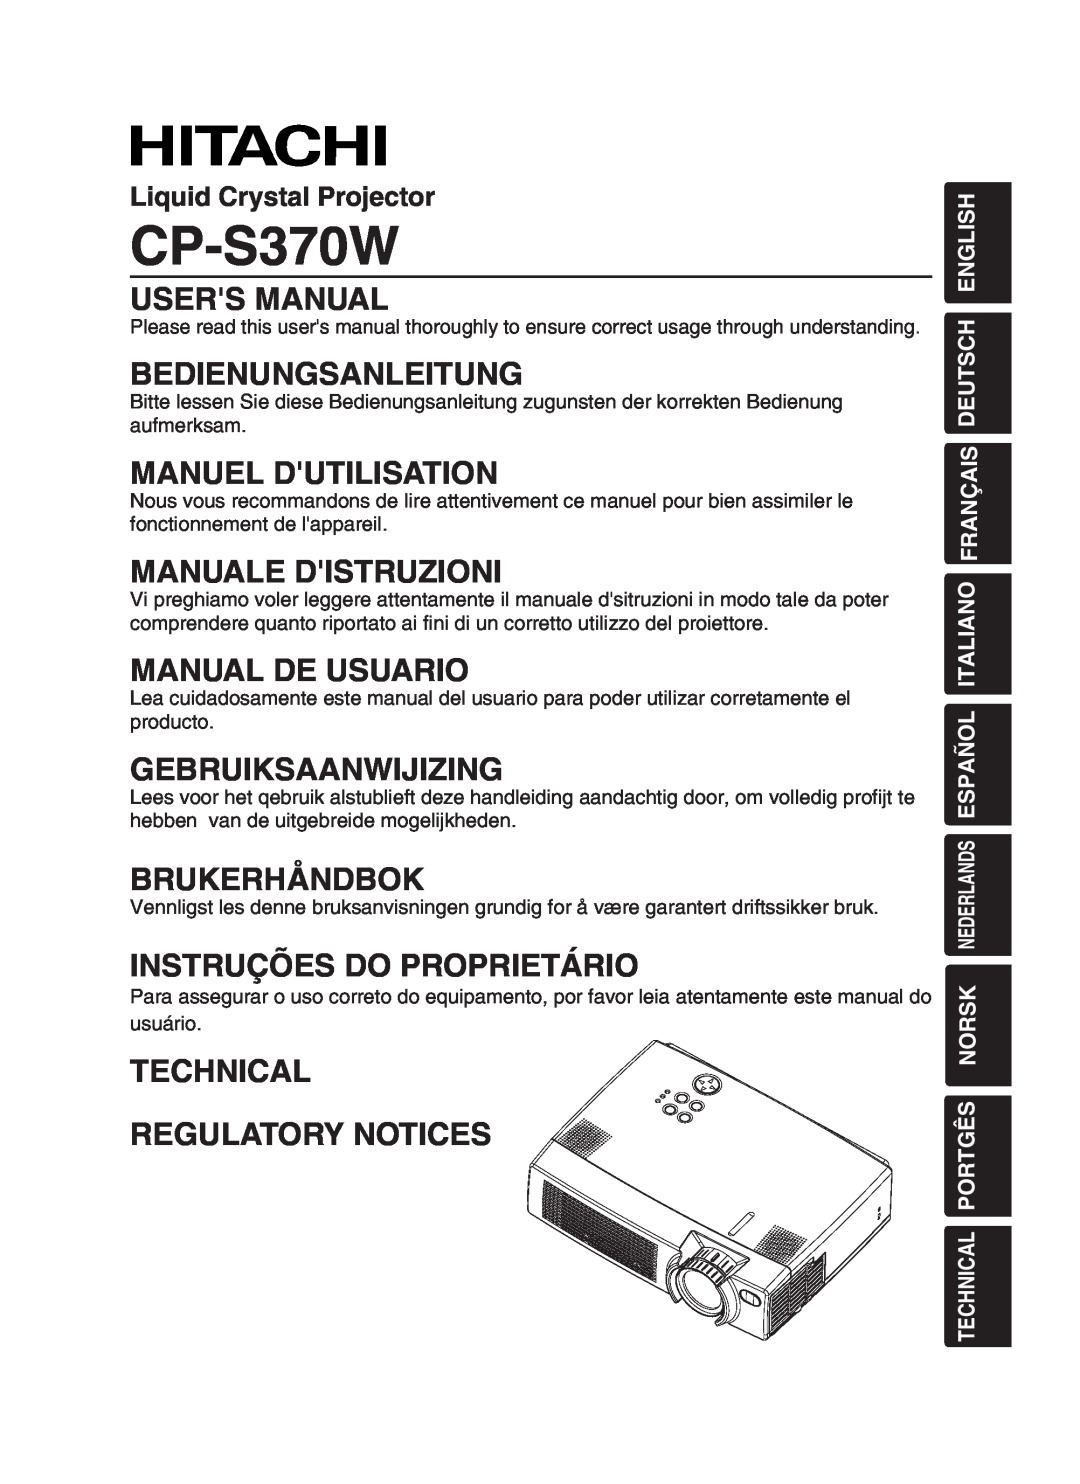 Hitachi CP-S370W user manual Bedienungsanleitung, Manuel Dutilisation, Manuale Distruzioni, Manual De Usuario 